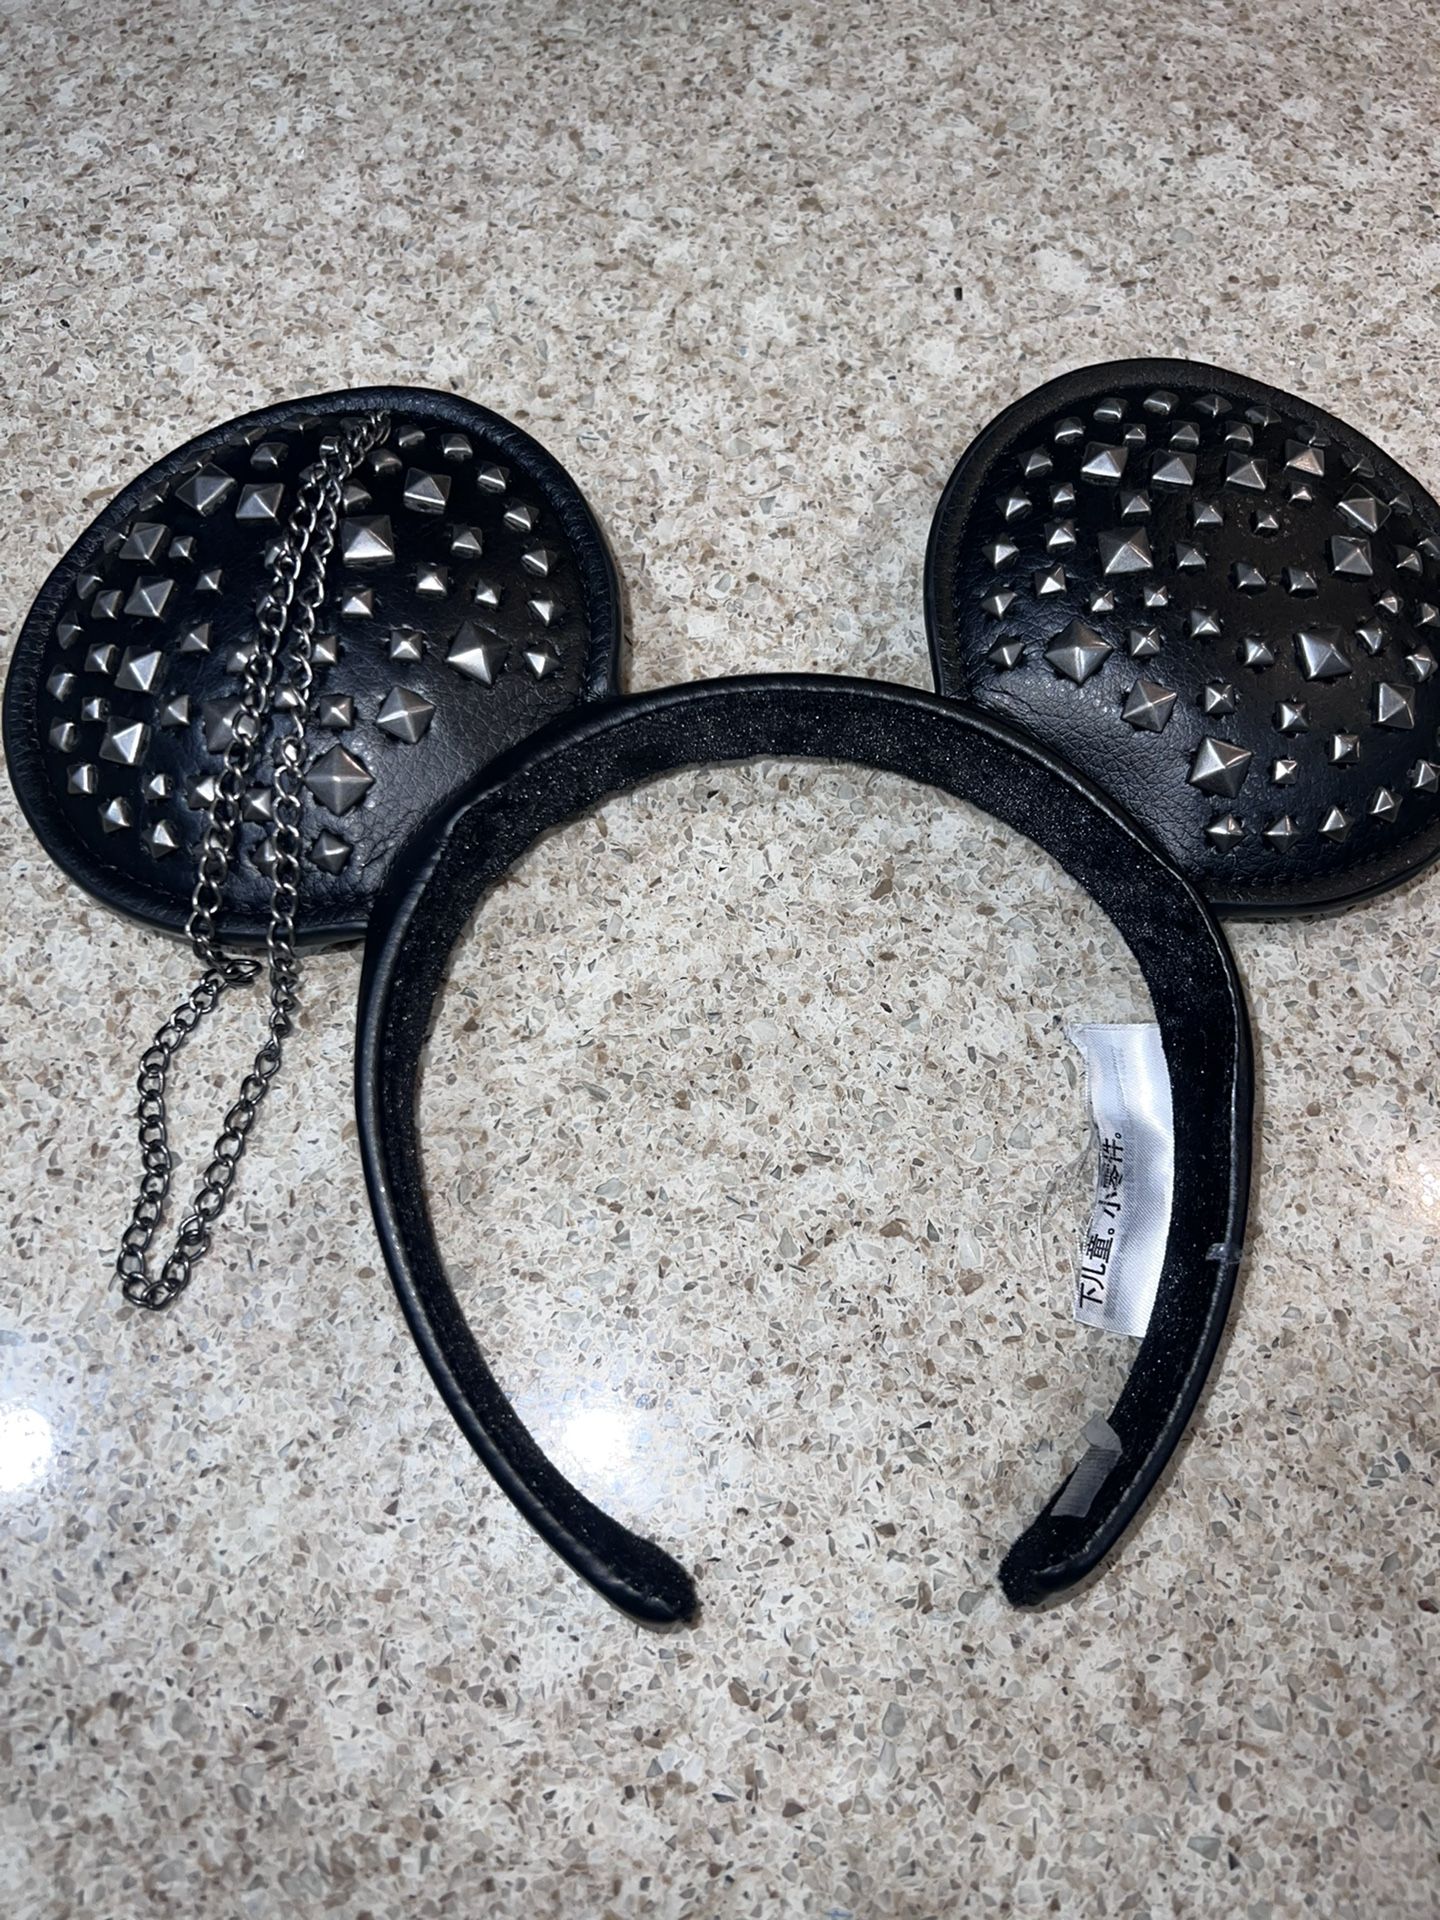 Mickey or Minnie “Rock & Roll” Ears